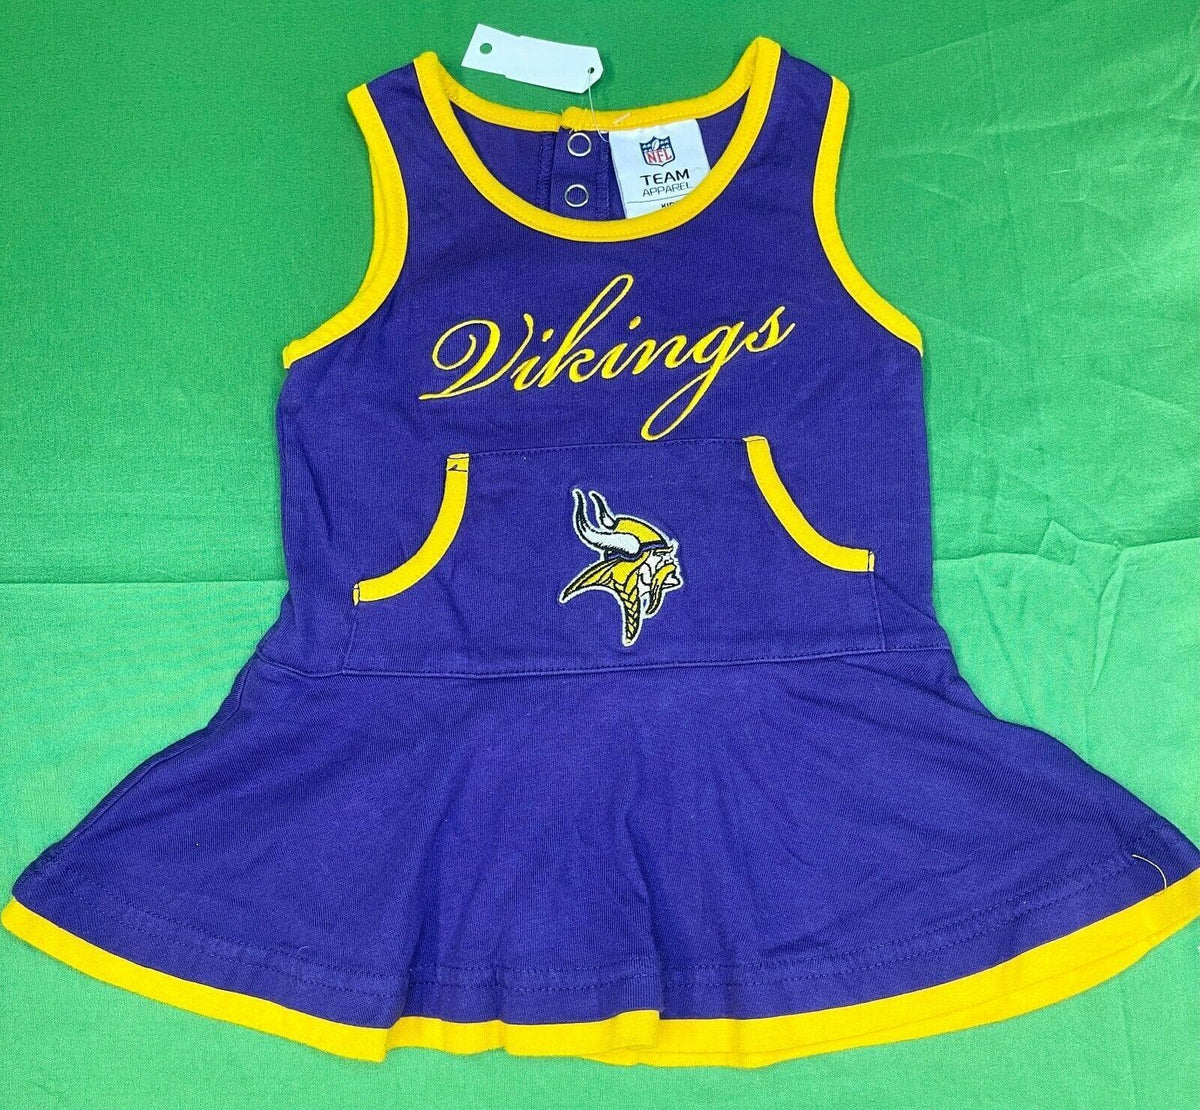 NFL Minnesota Vikings Cheerleader-Style Dress 12 months